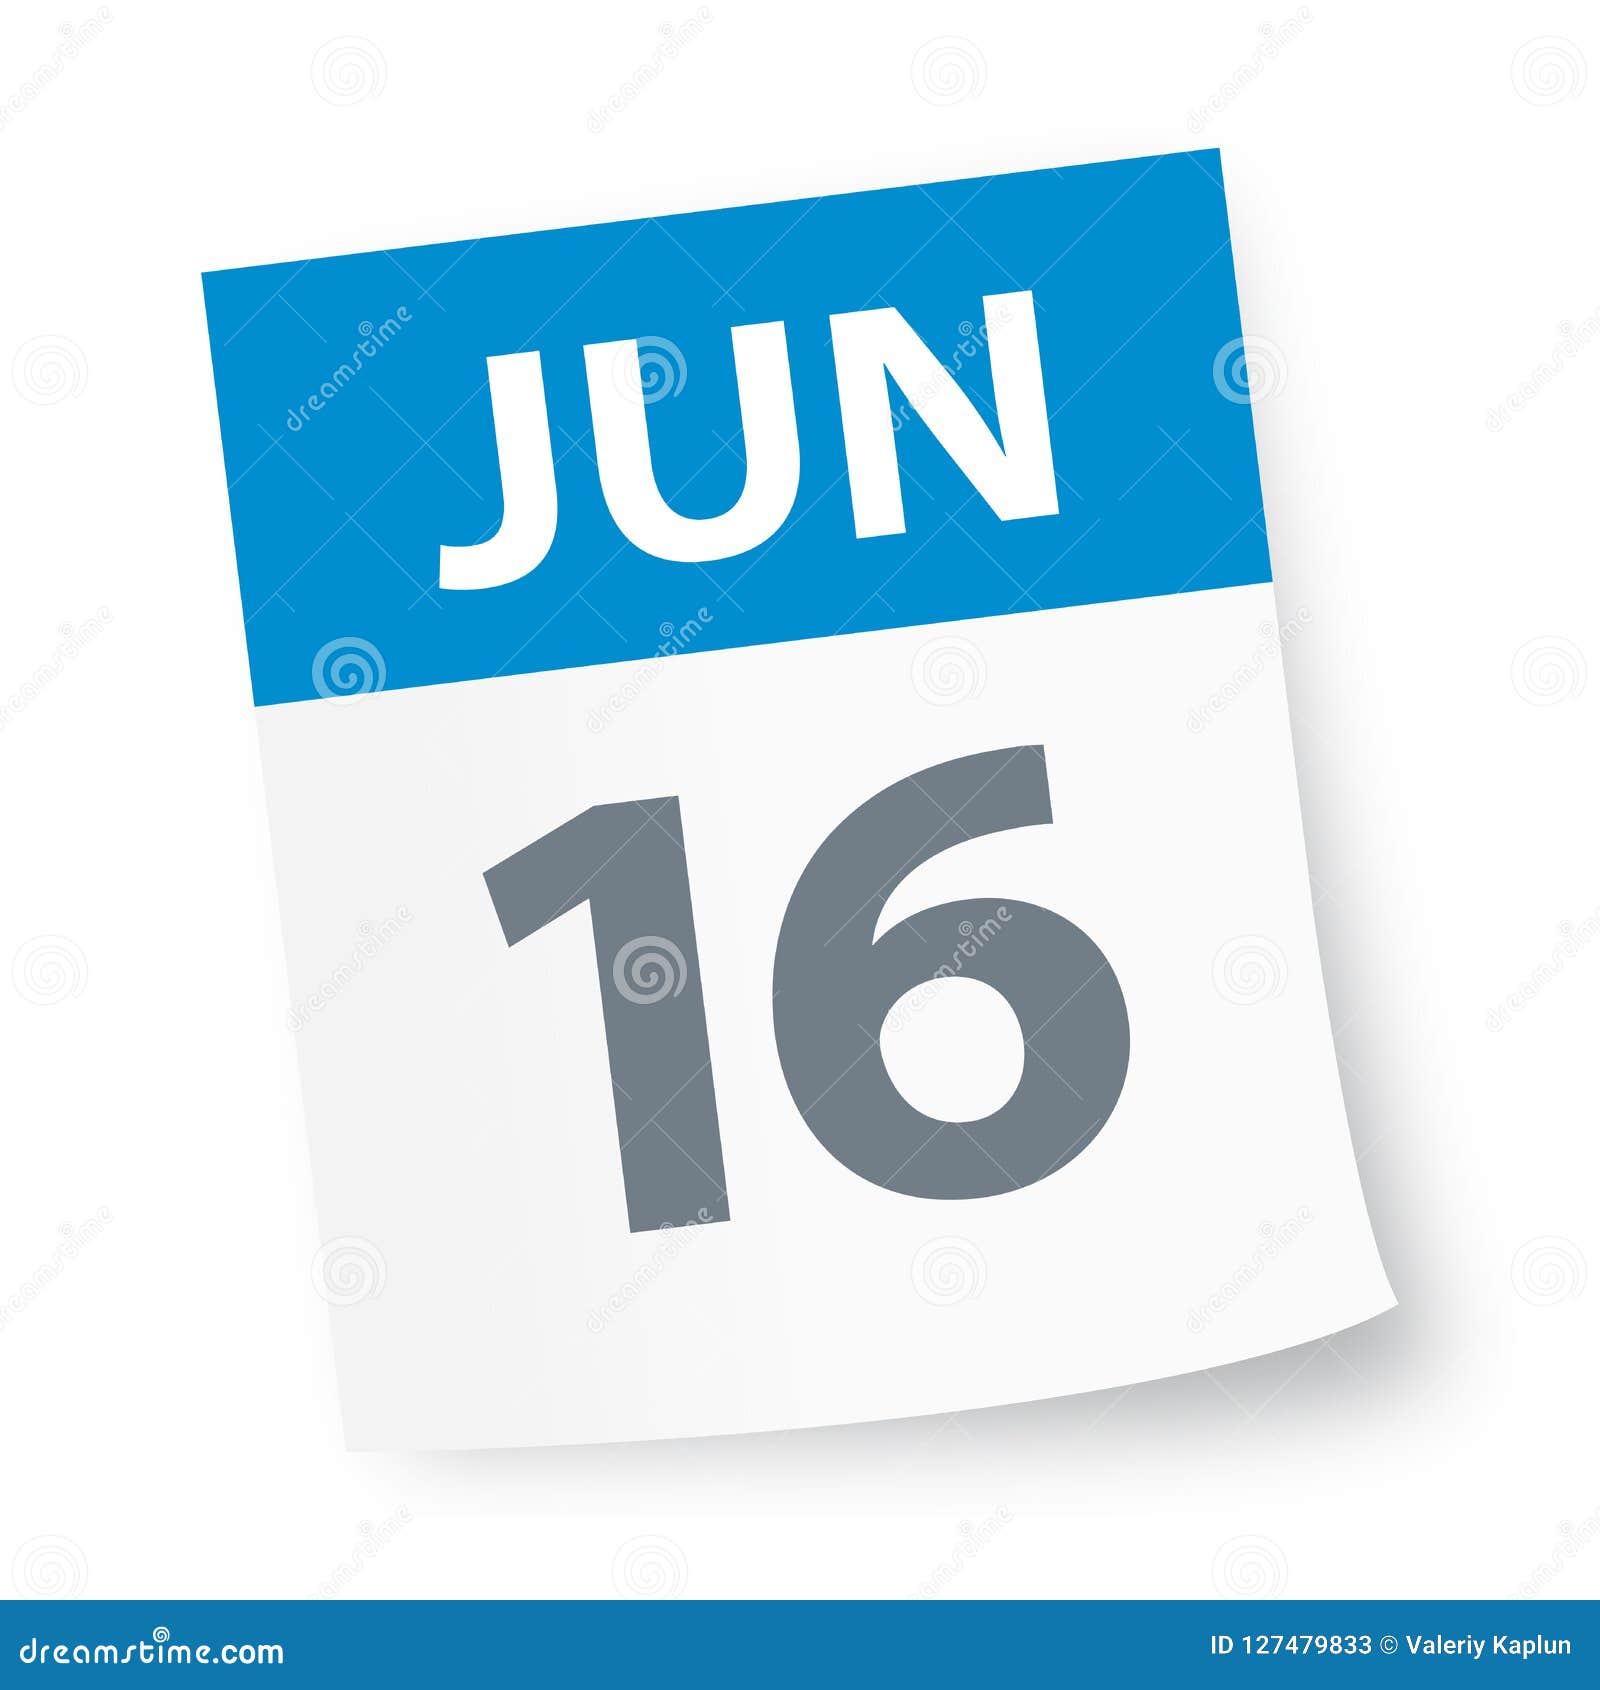 june 16 - calendar icon